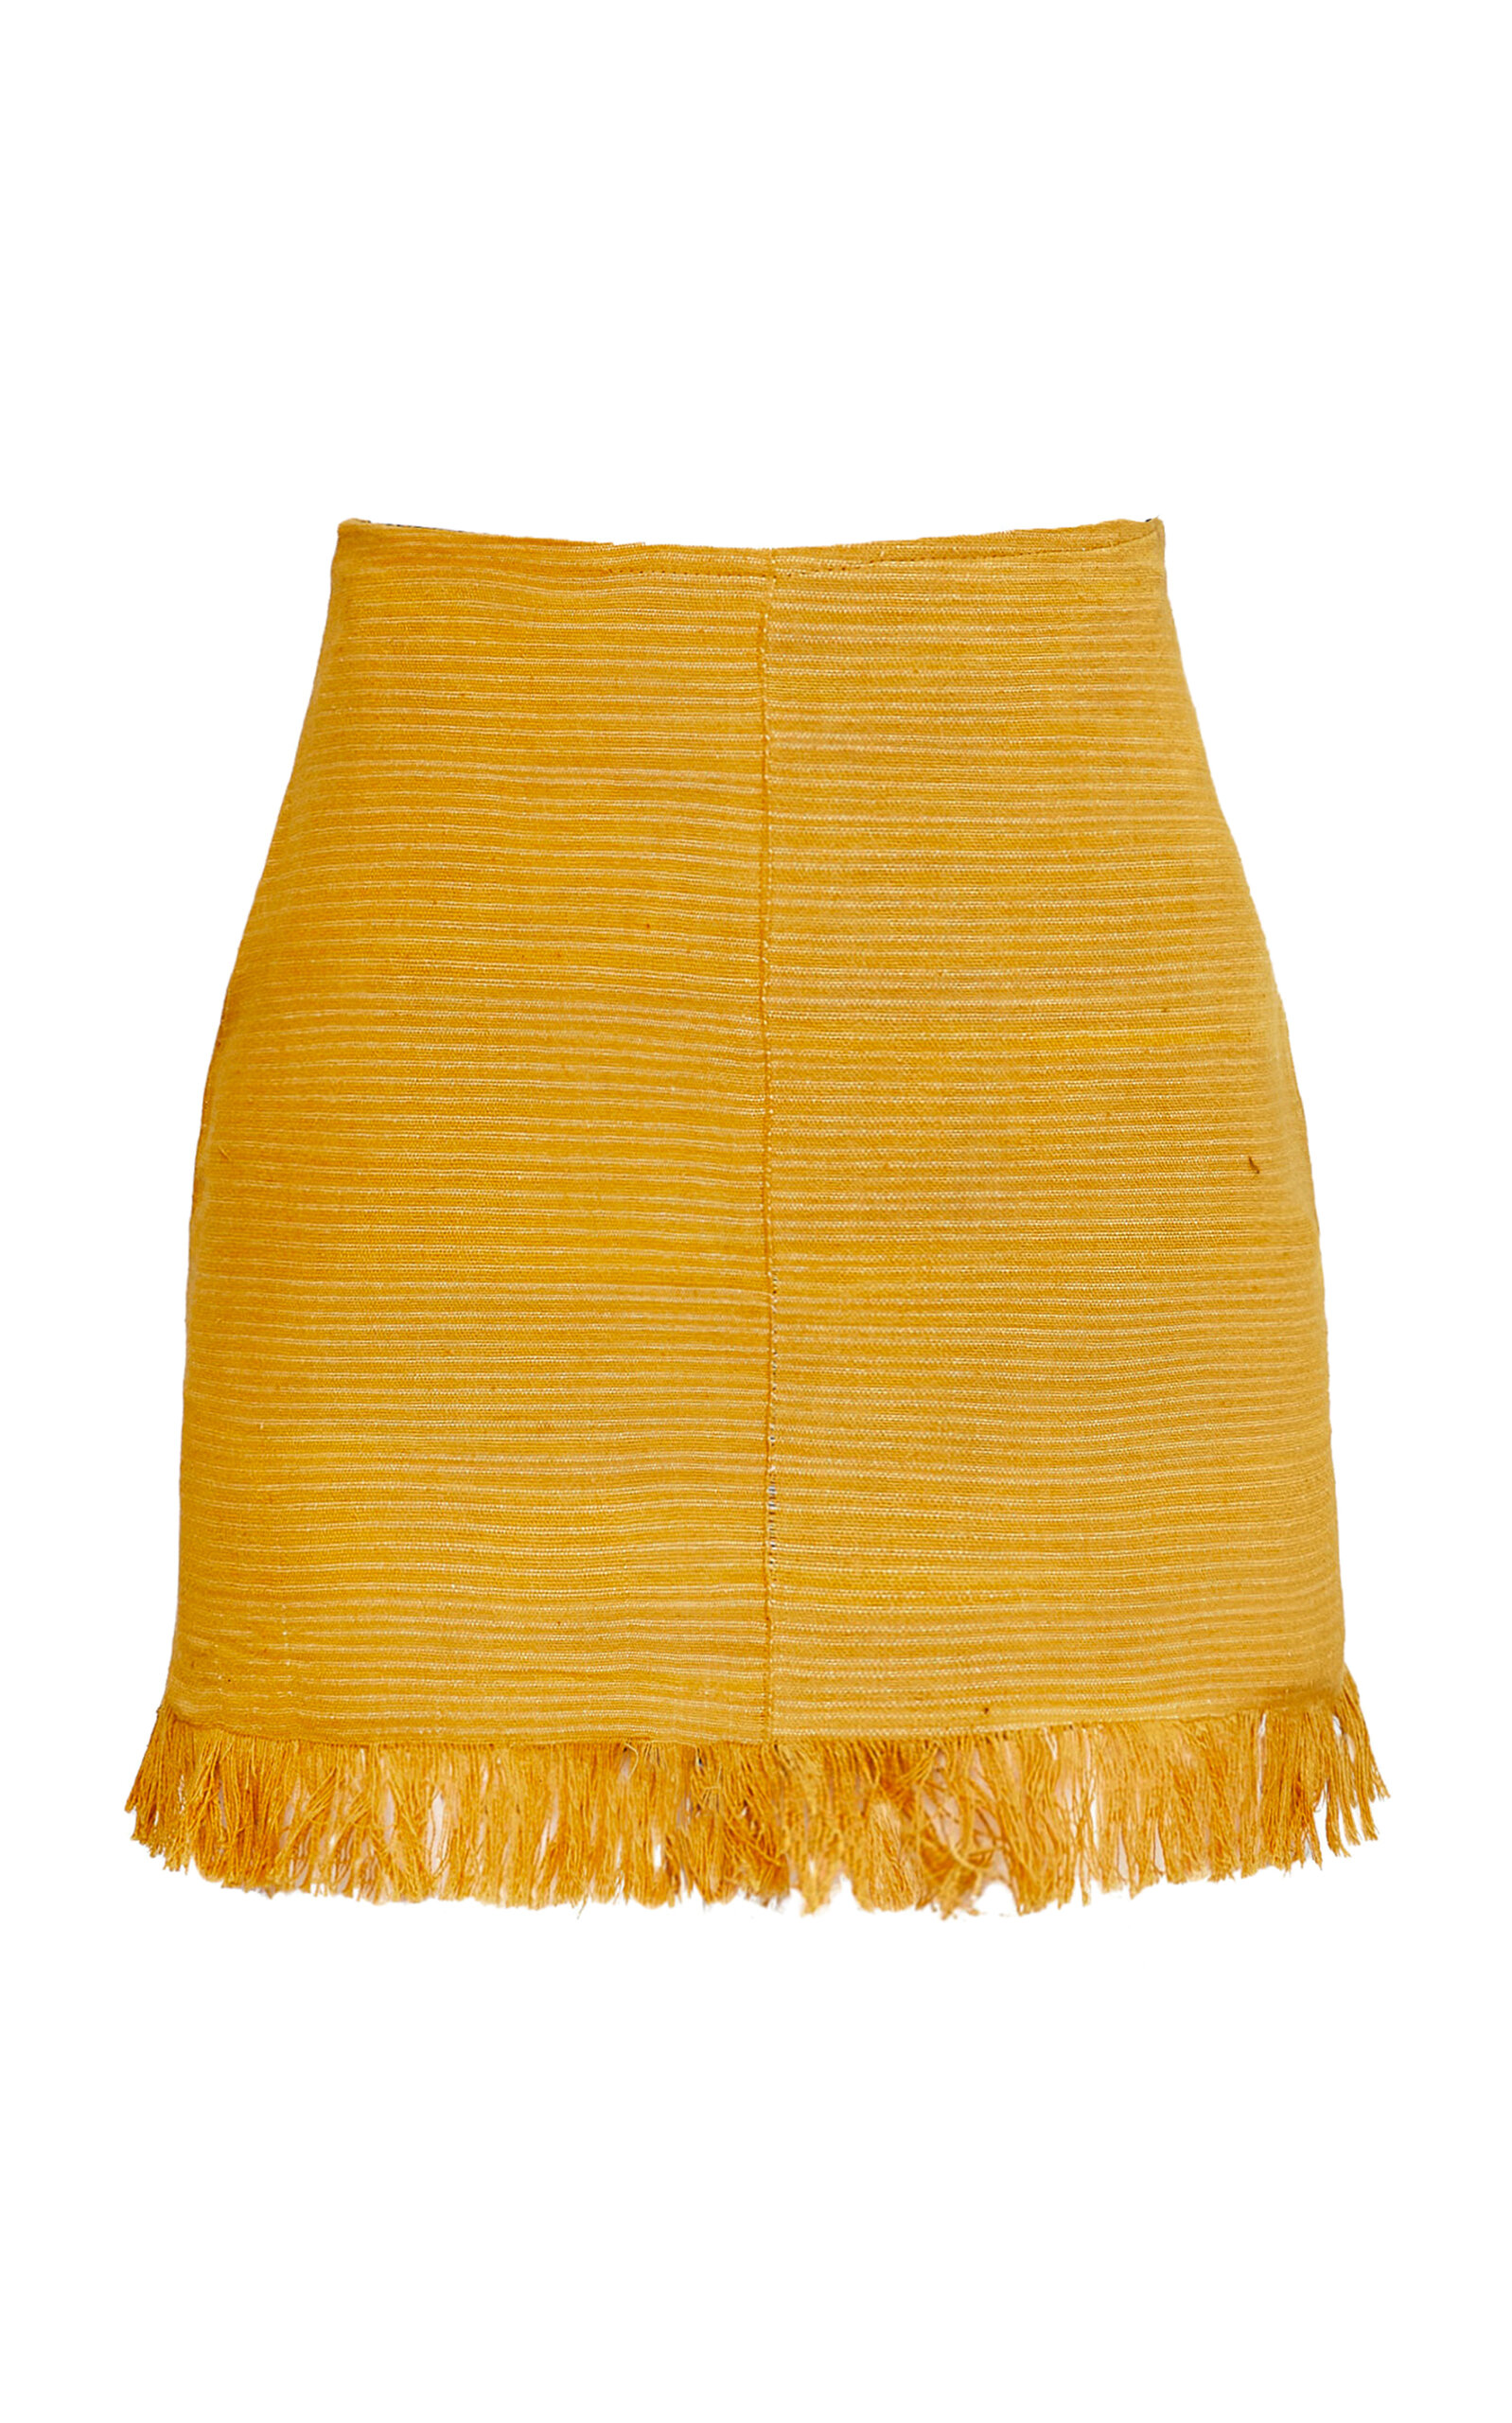 Kilentar Yepa Woven Cotton Mini Skirt In Yellow